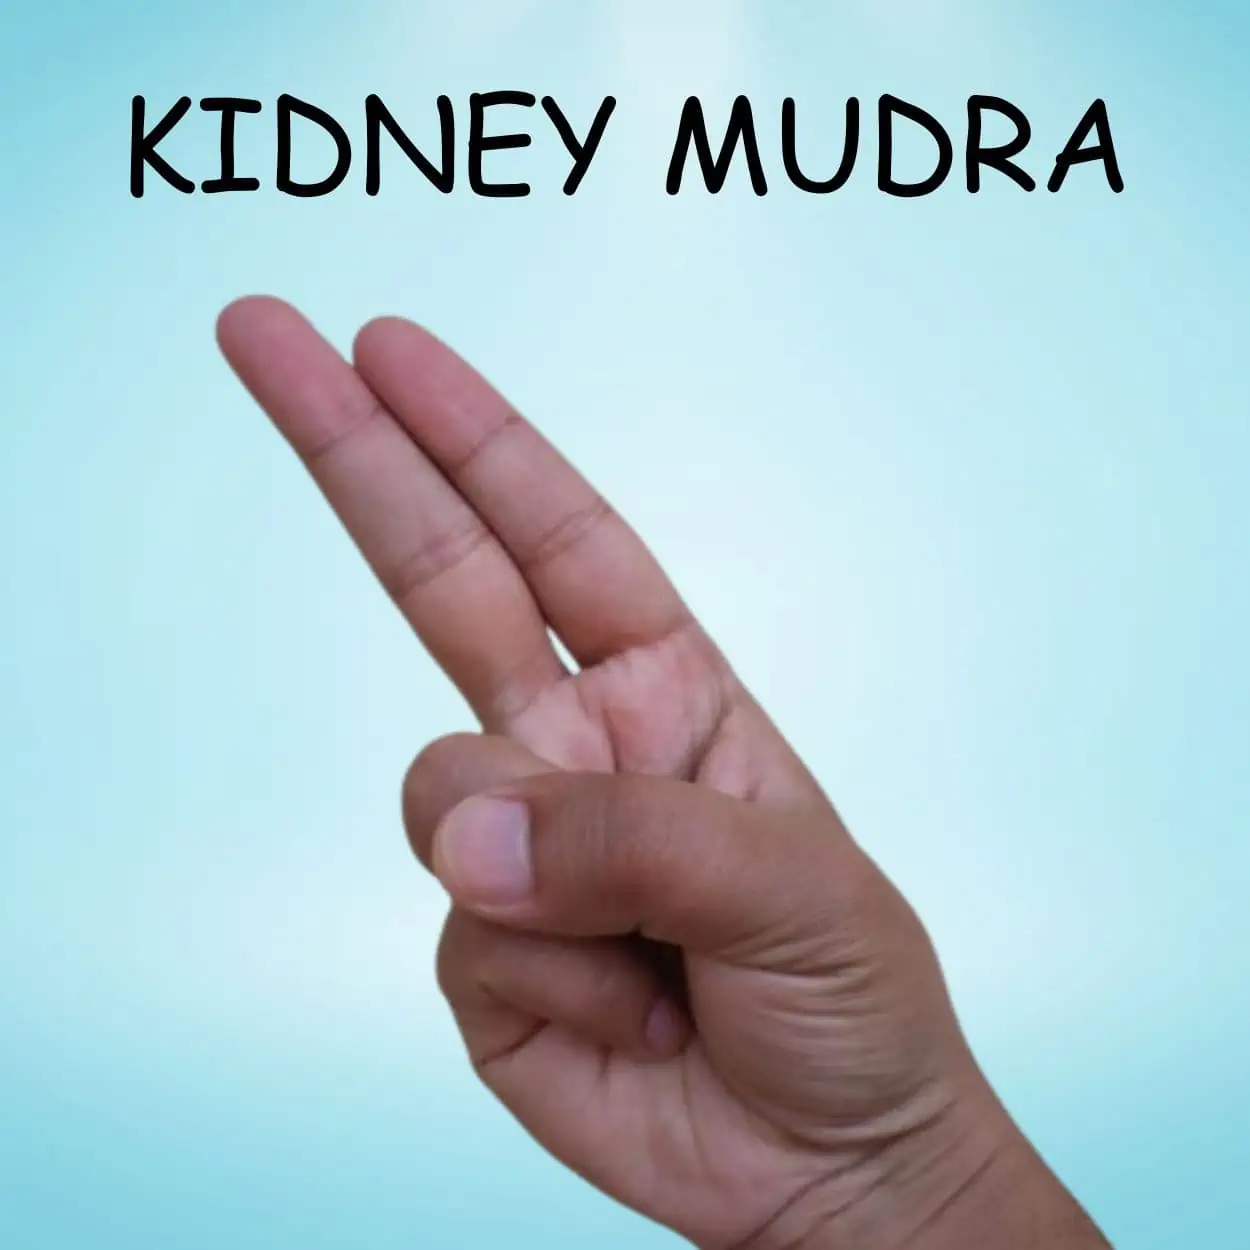 Kidney Mudra